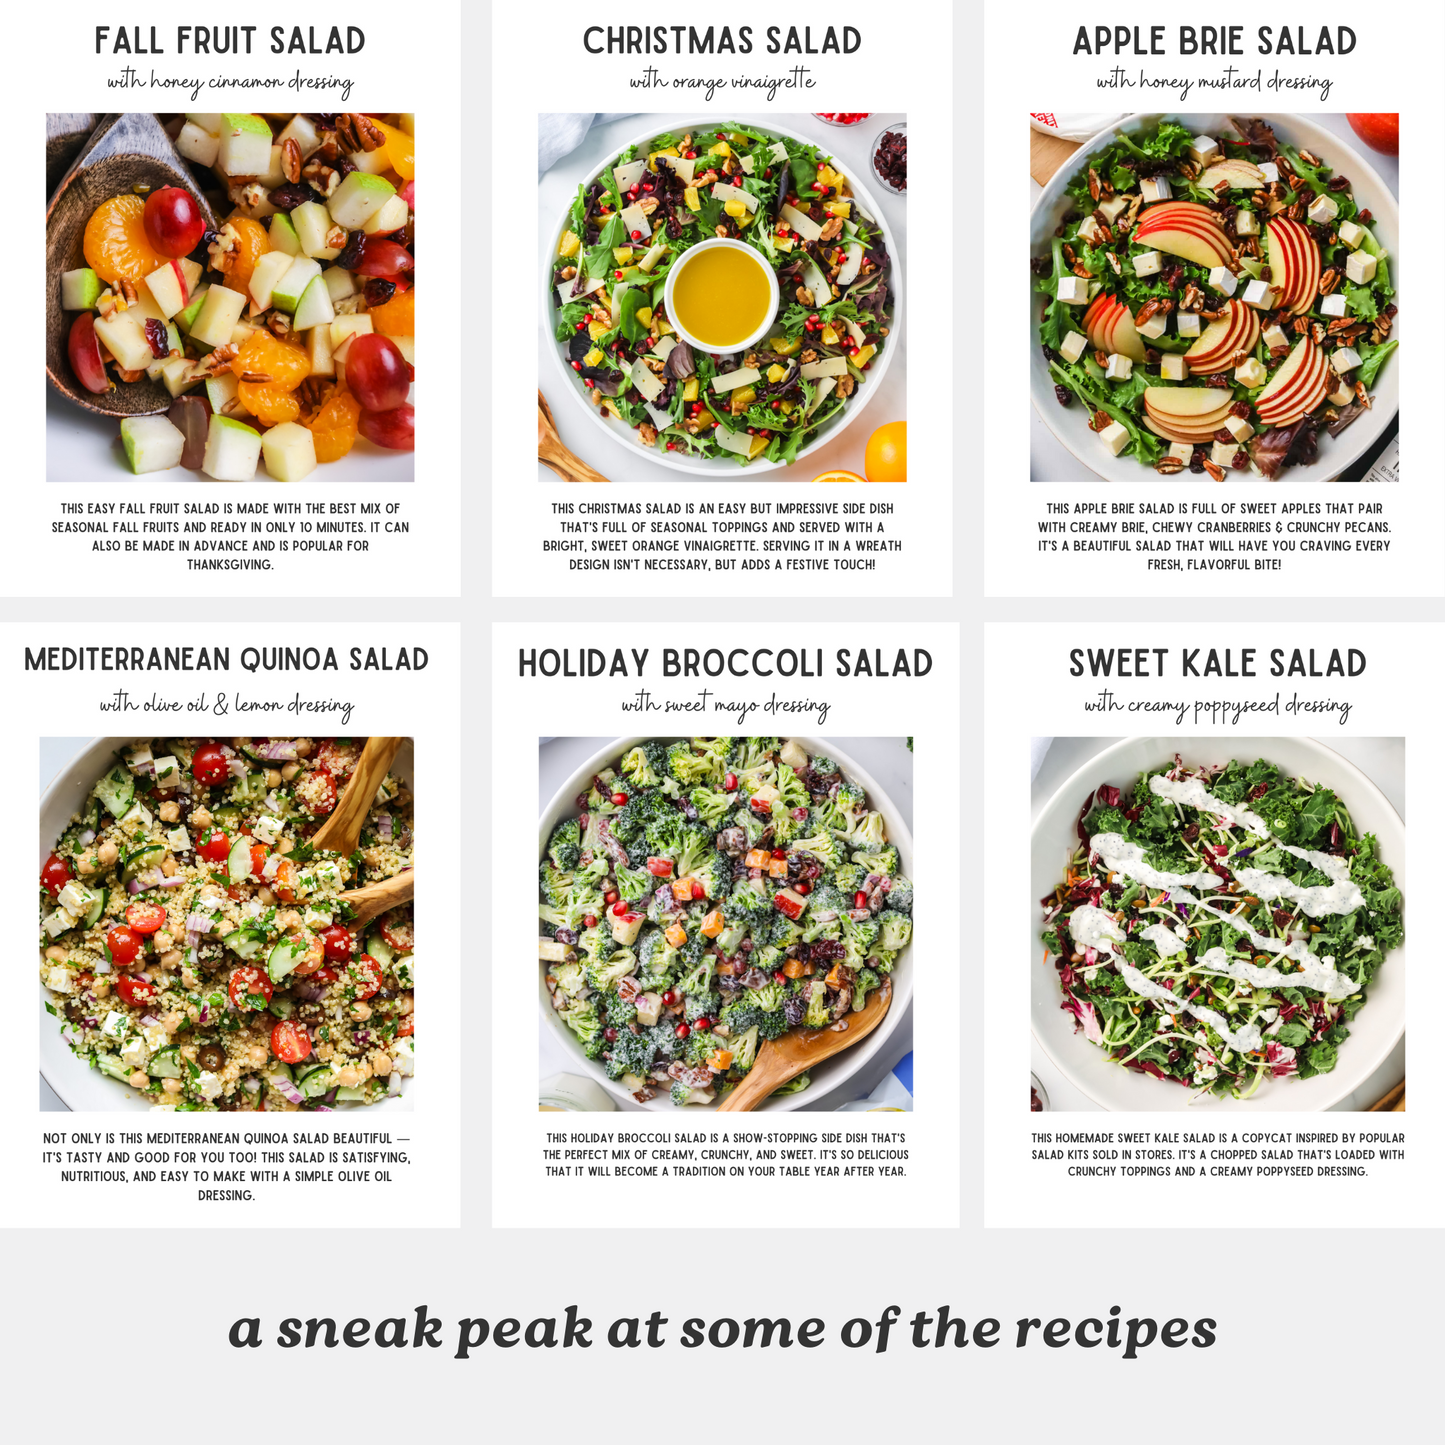 Fall & Winter Salads eBook